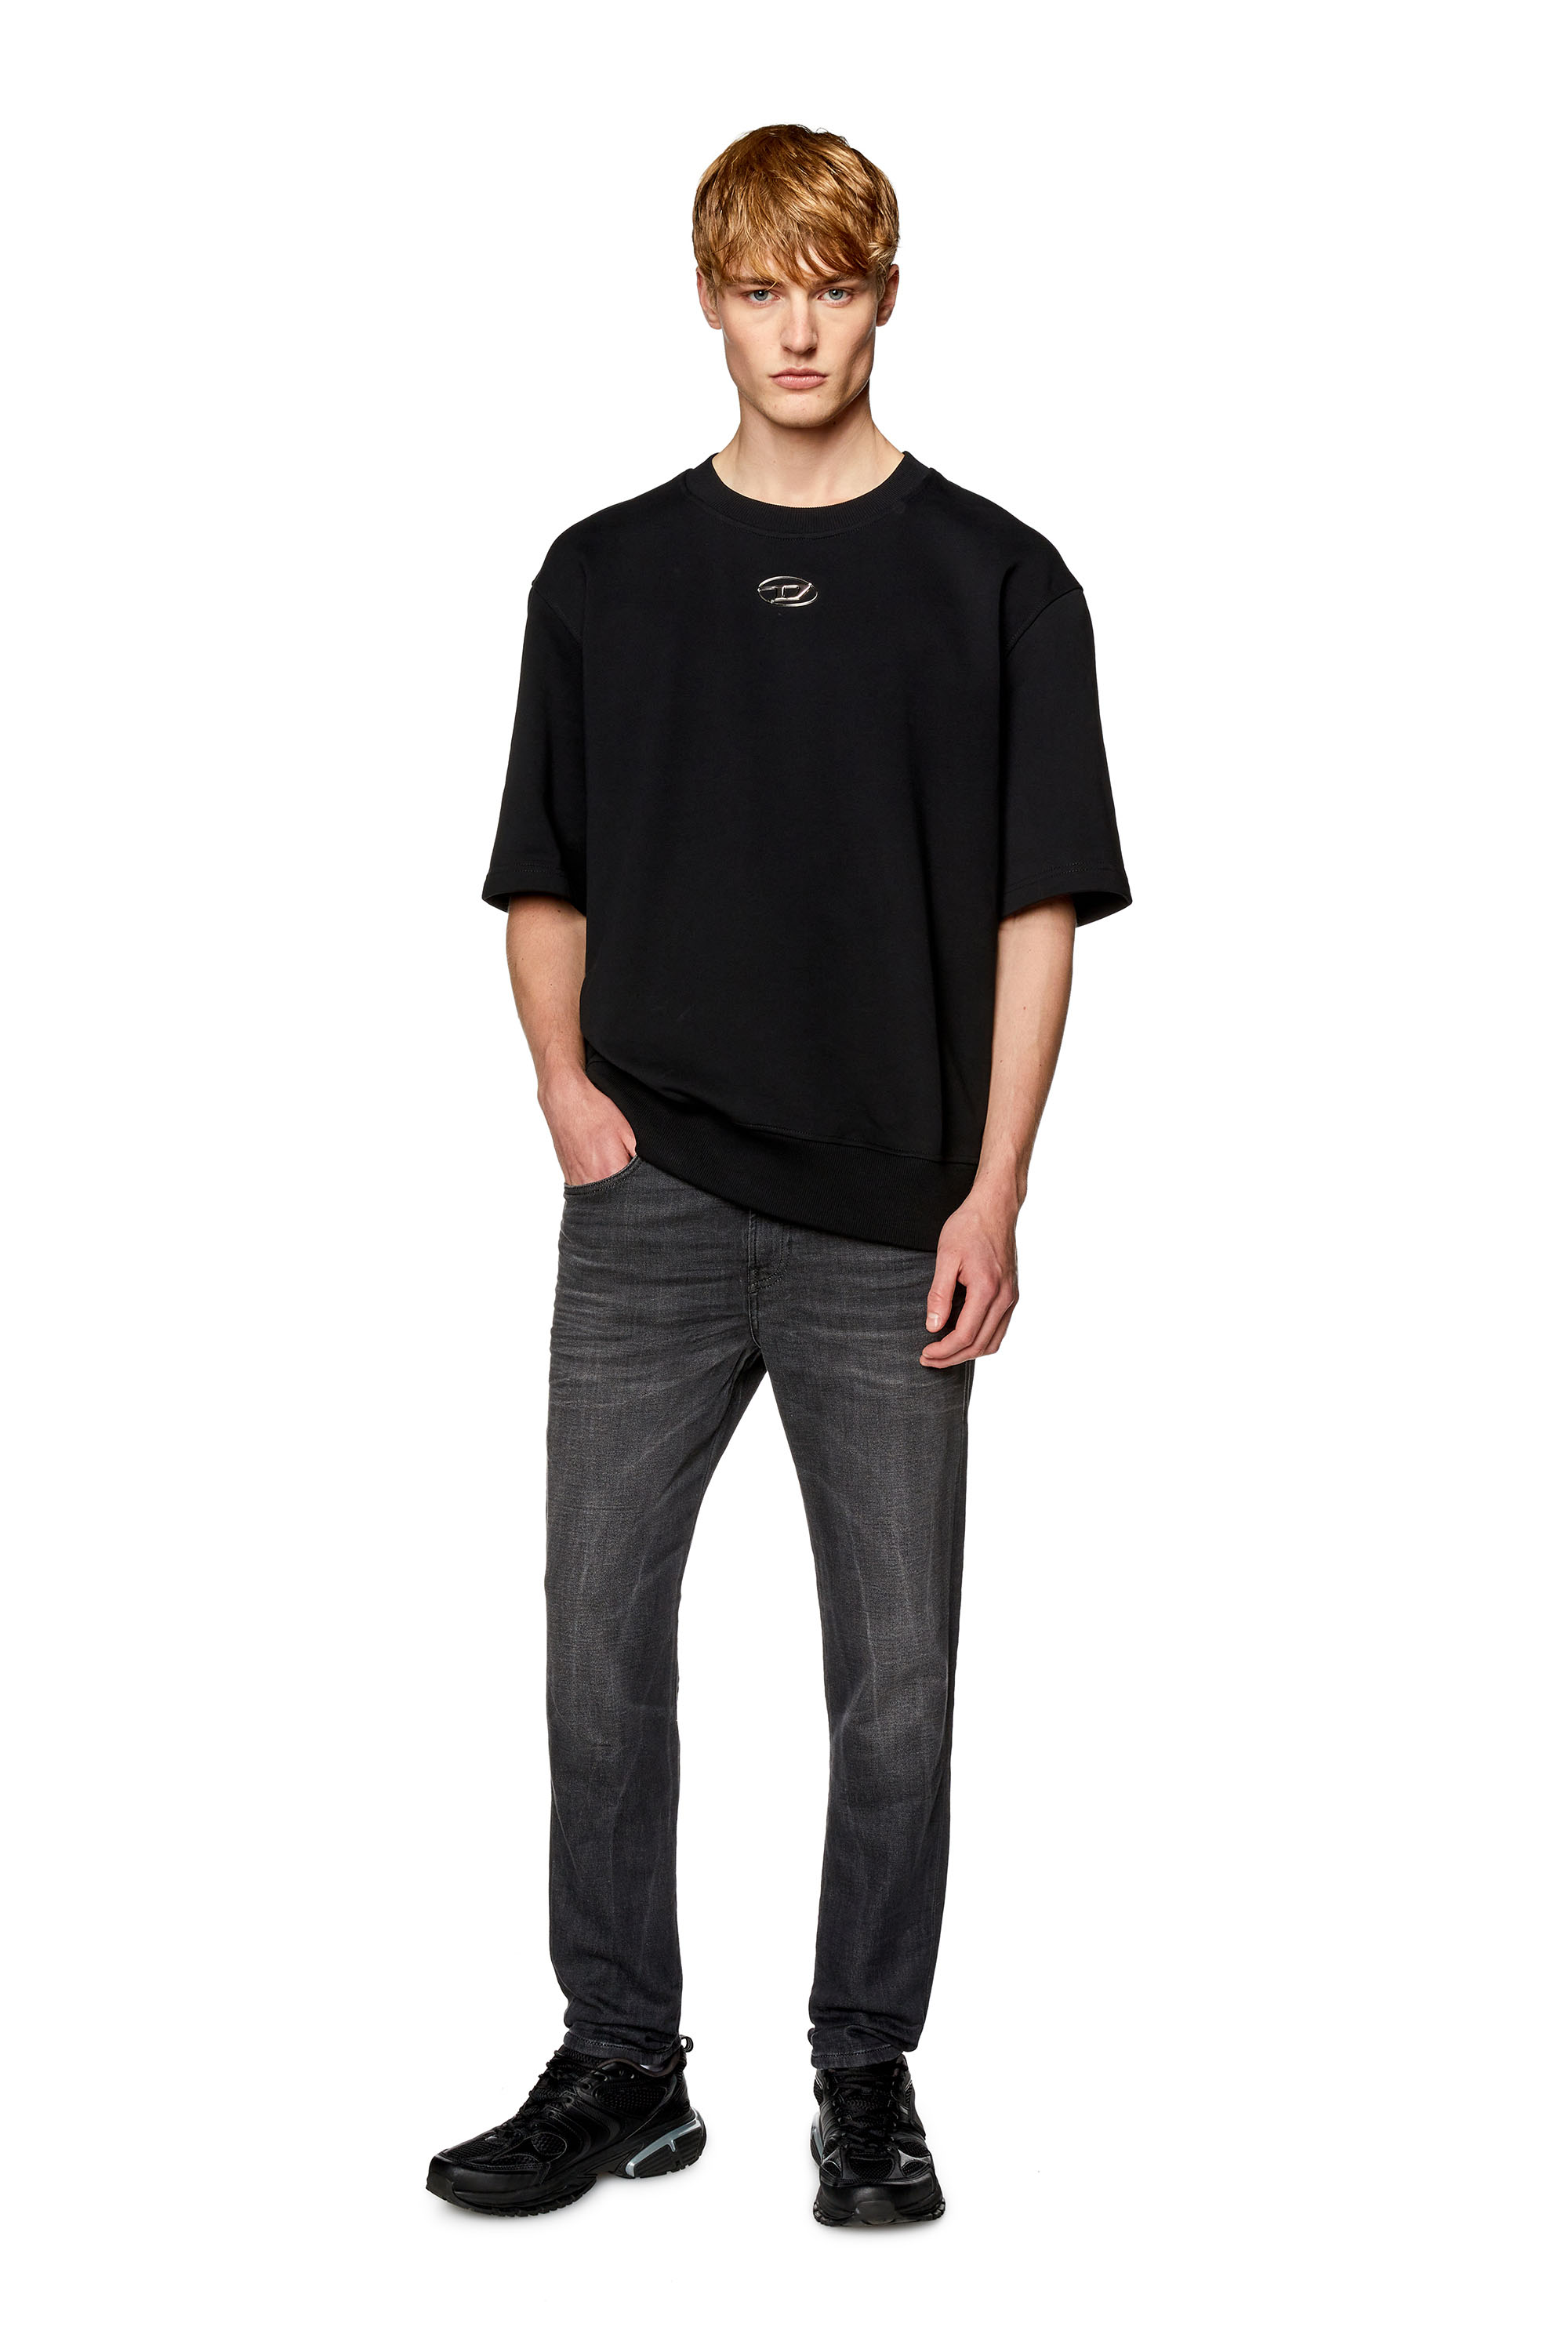 Men's Slim Jeans | Black/Dark grey | Diesel E-Spender JoggJeans®